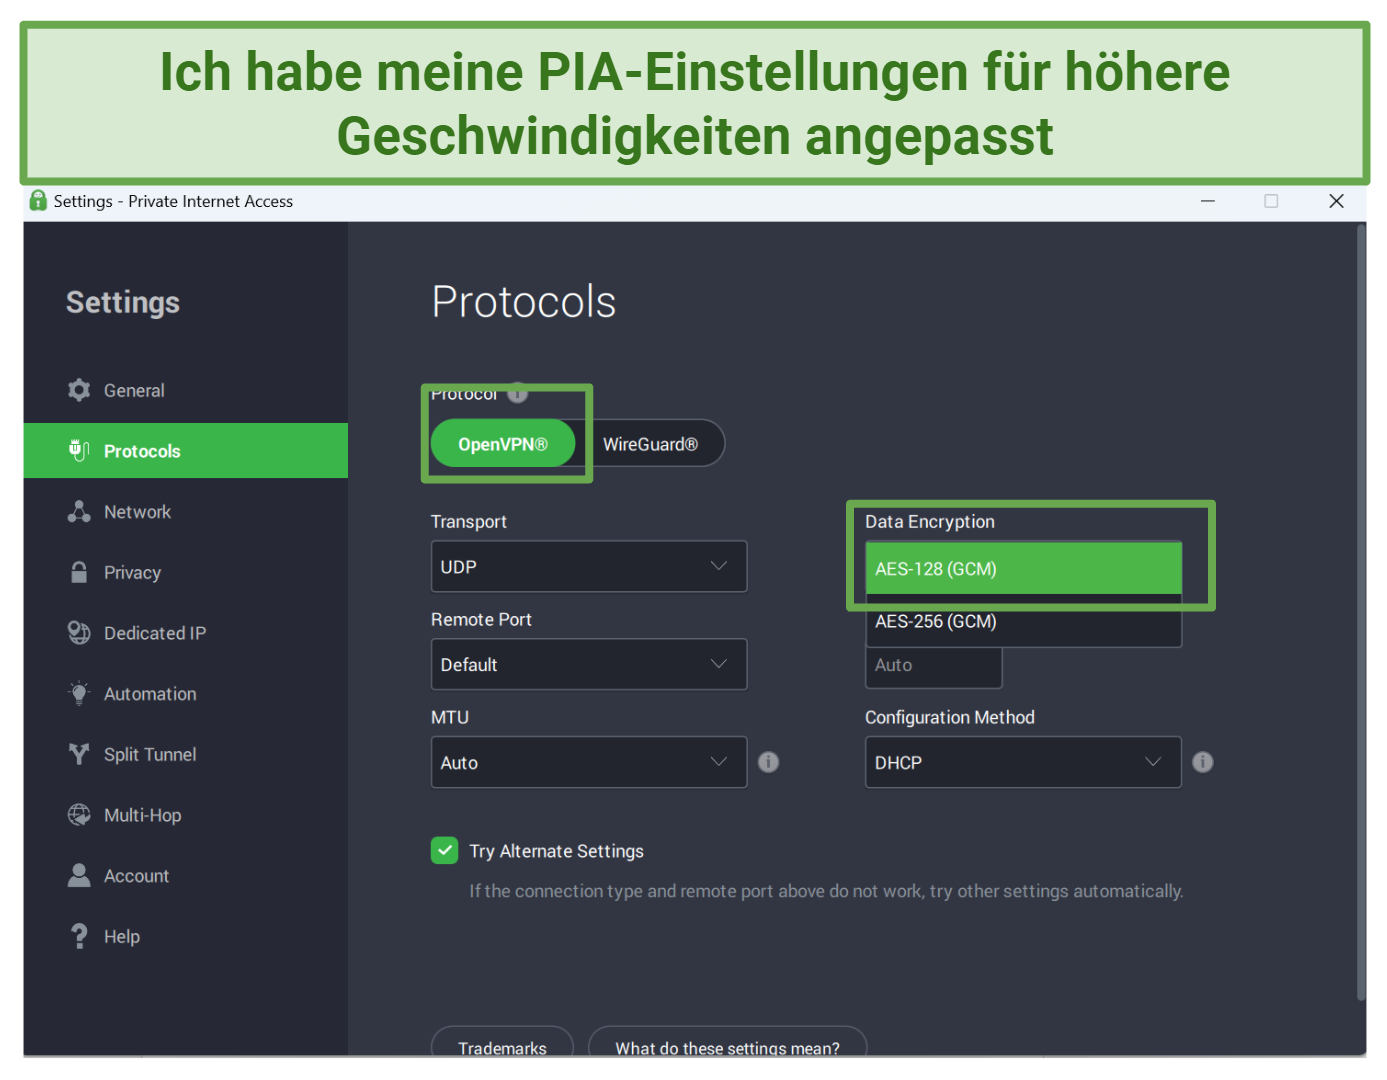 A screenshot showing PIAs customizable security protocols